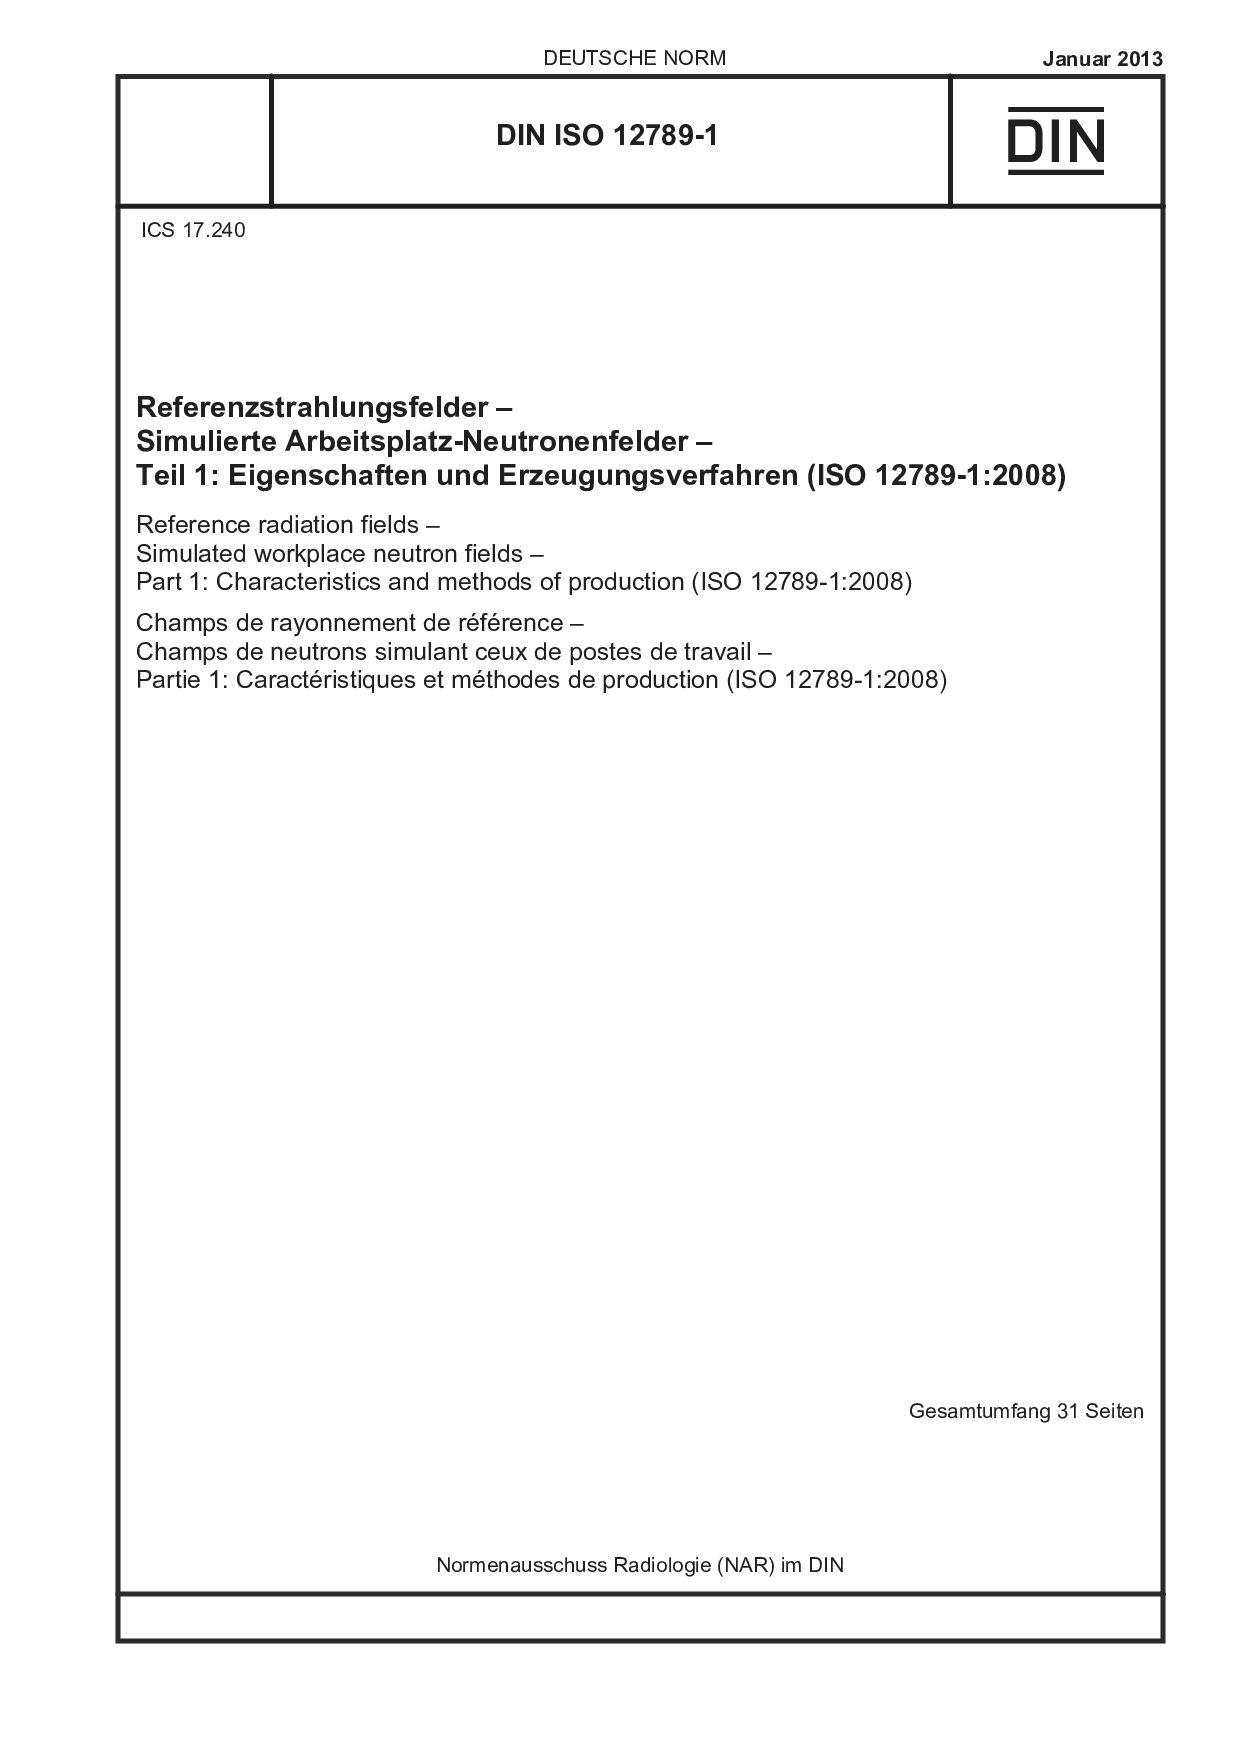 DIN ISO 12789-1:2013